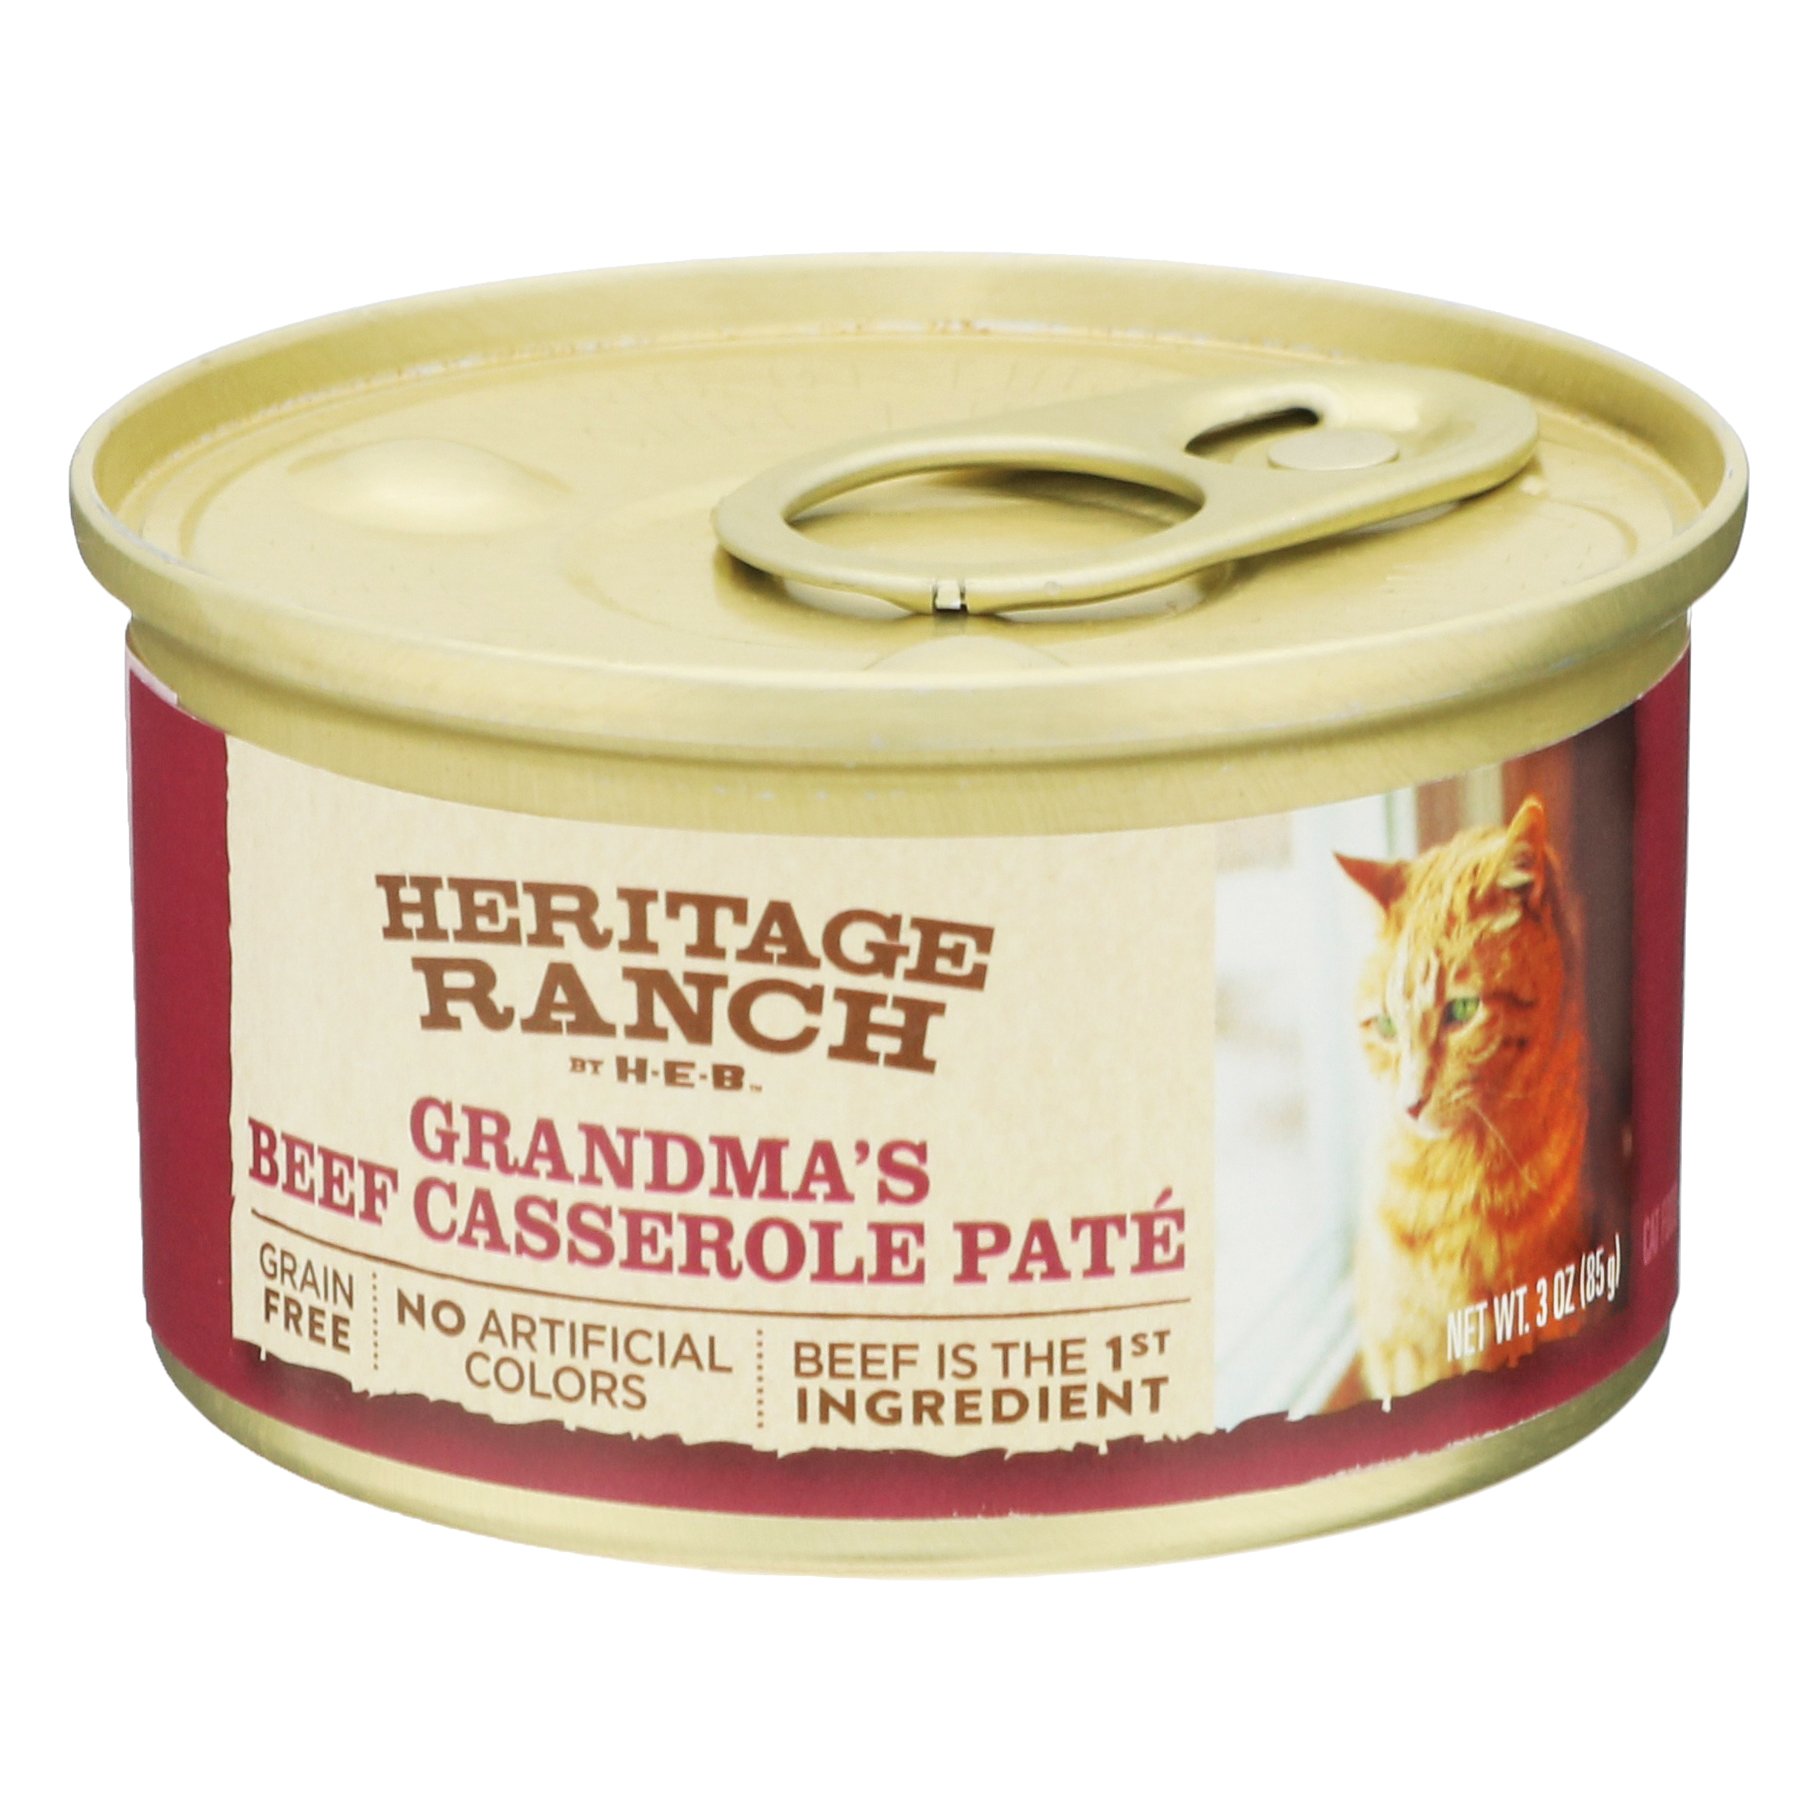 heb heritage ranch cat food